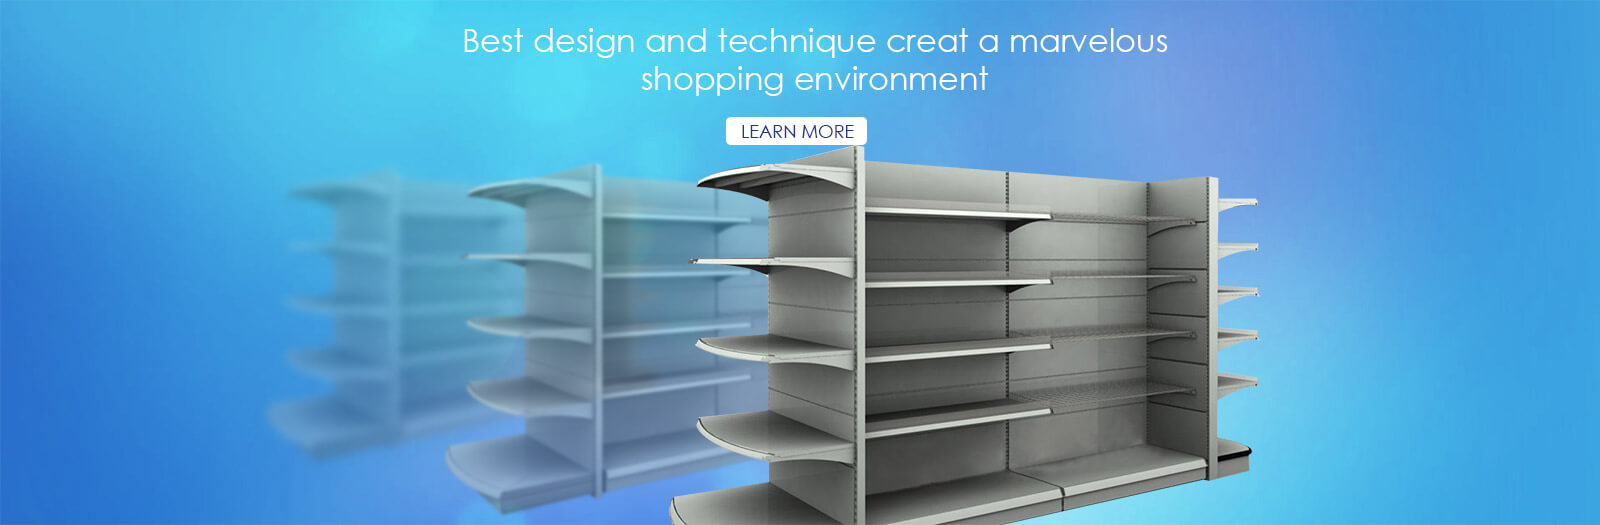 BEst design and technique creat a marvelous shopping environment